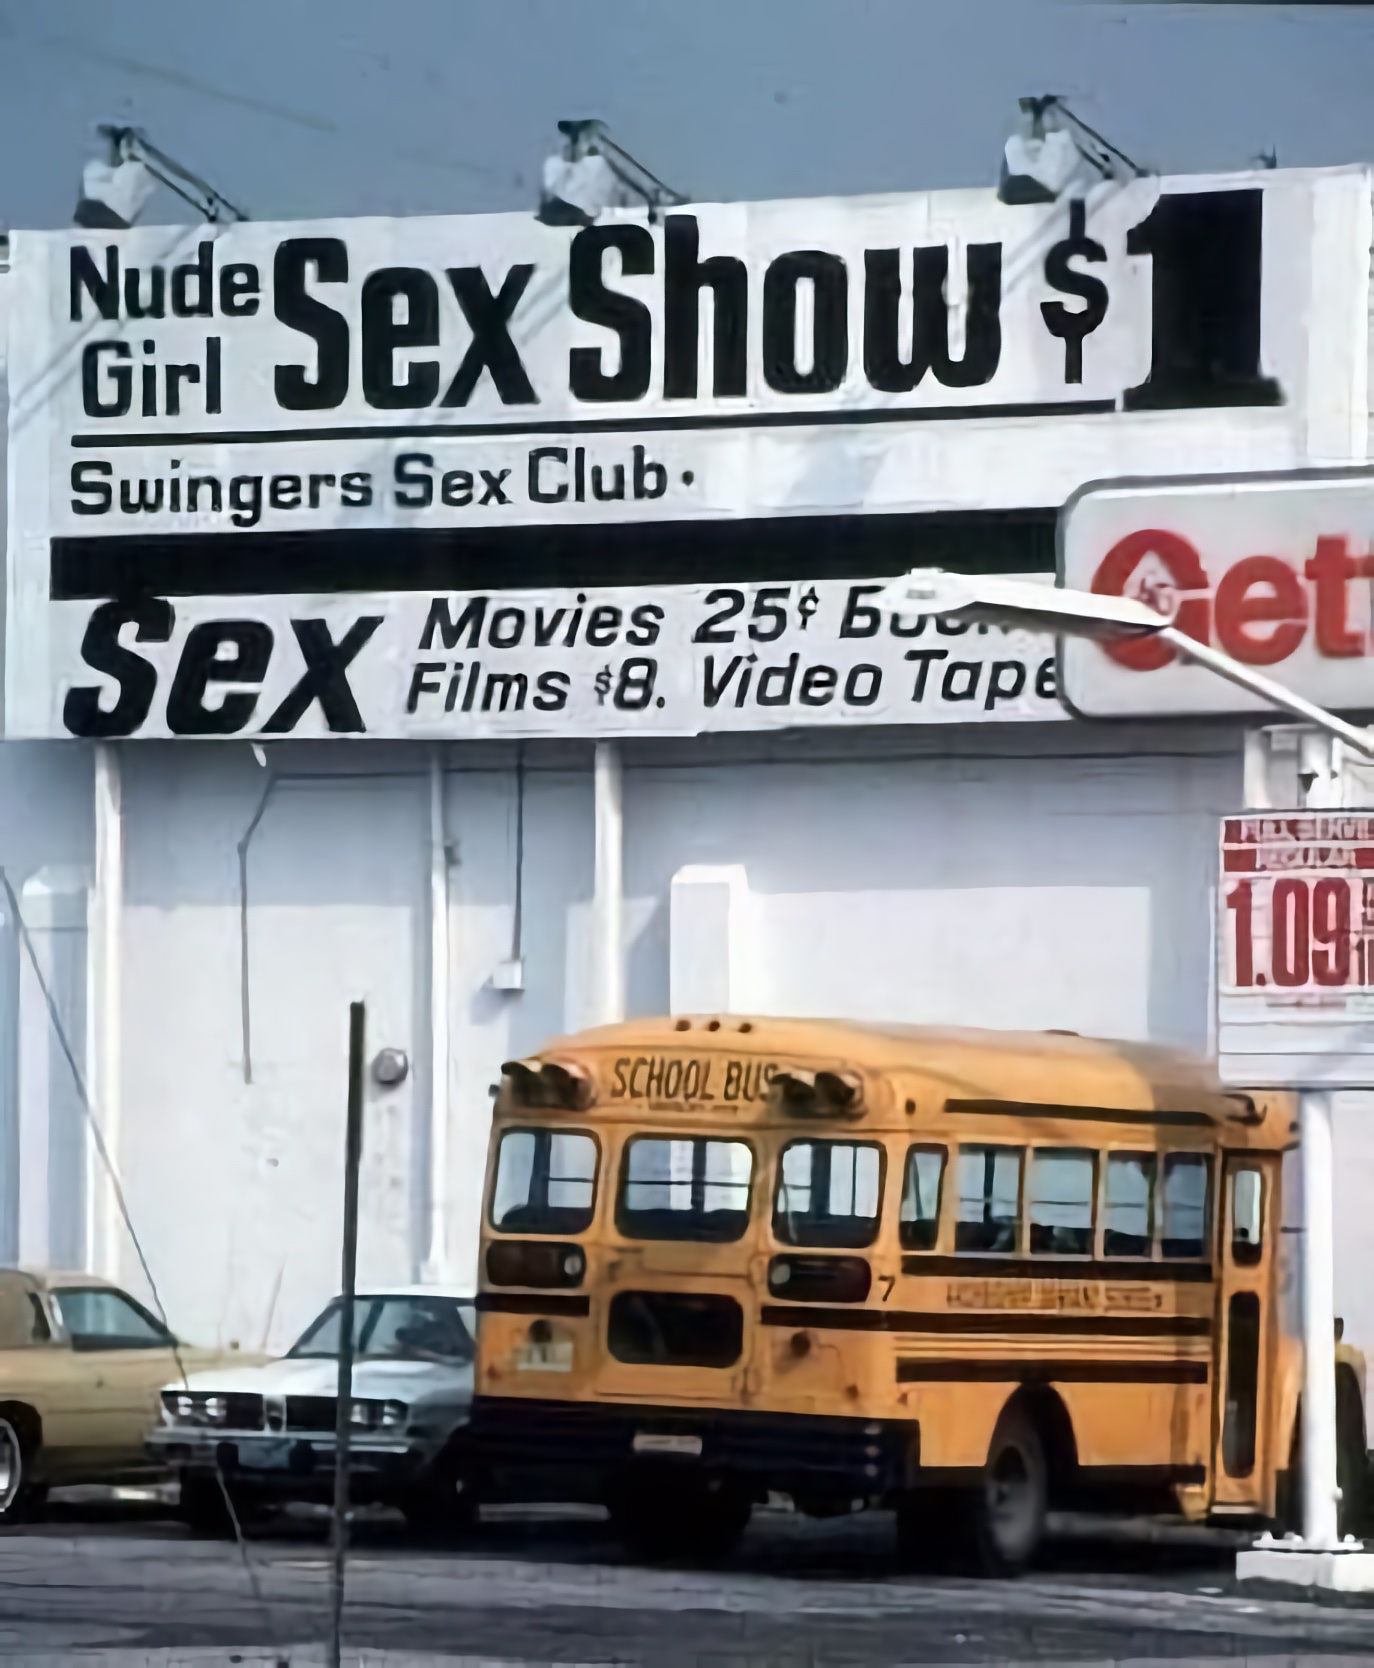 School bus at sex club.